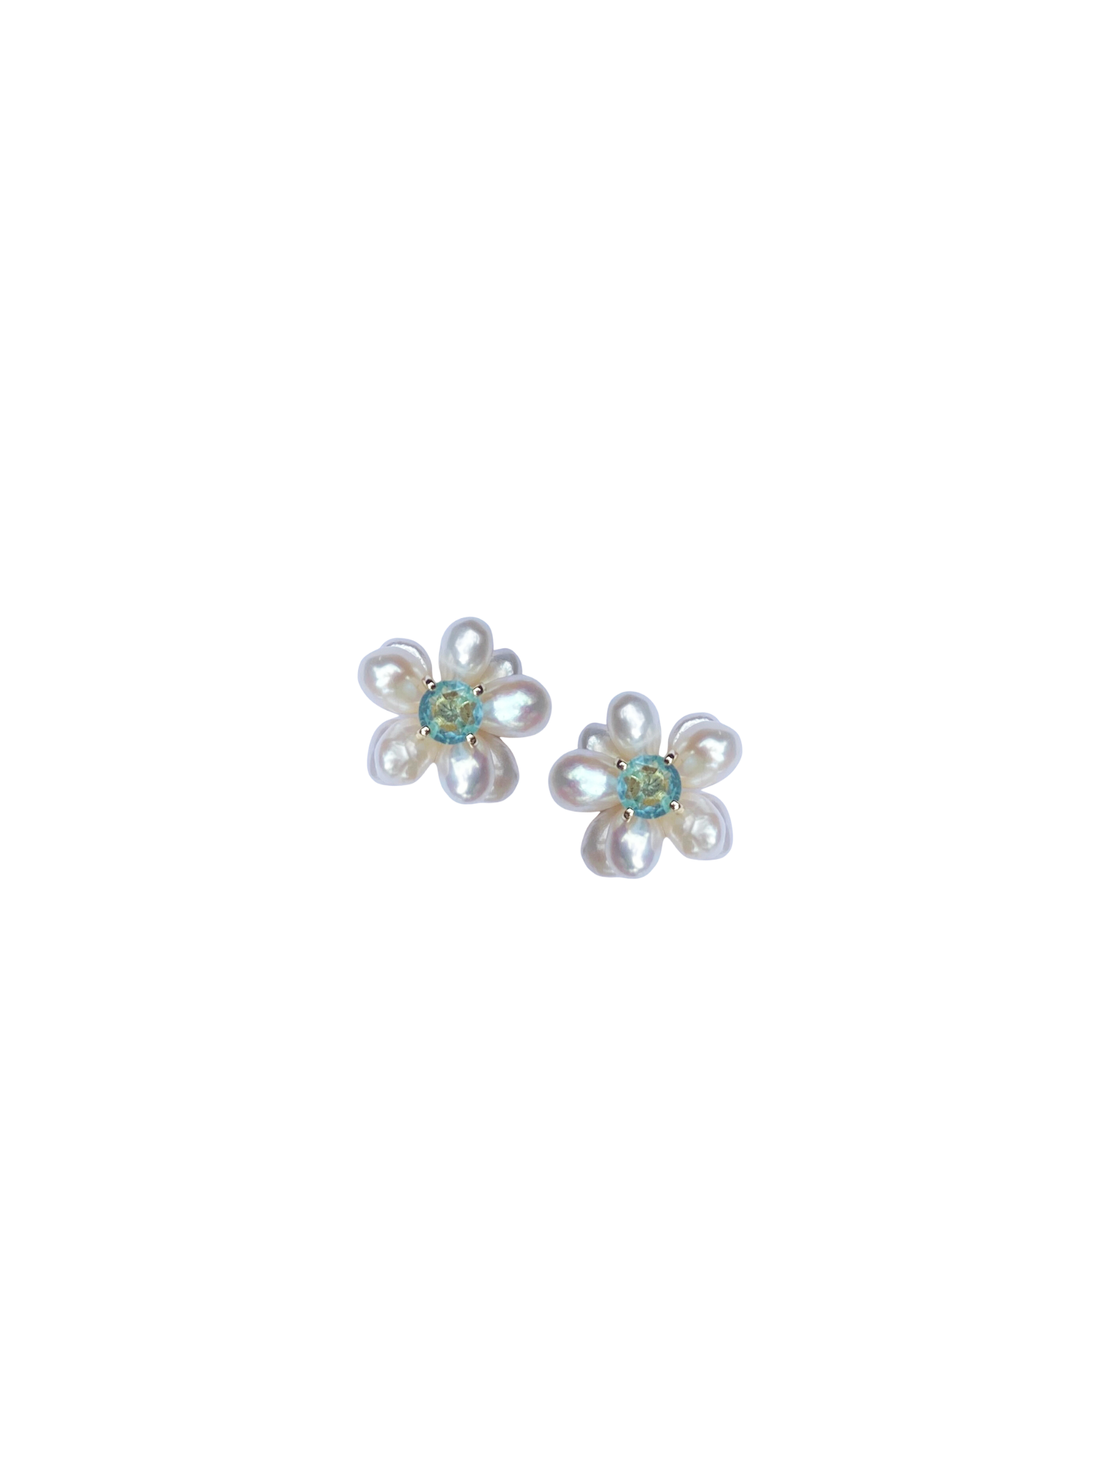 garden collection: freshwater pearls + light blue quartz hydrangea studs